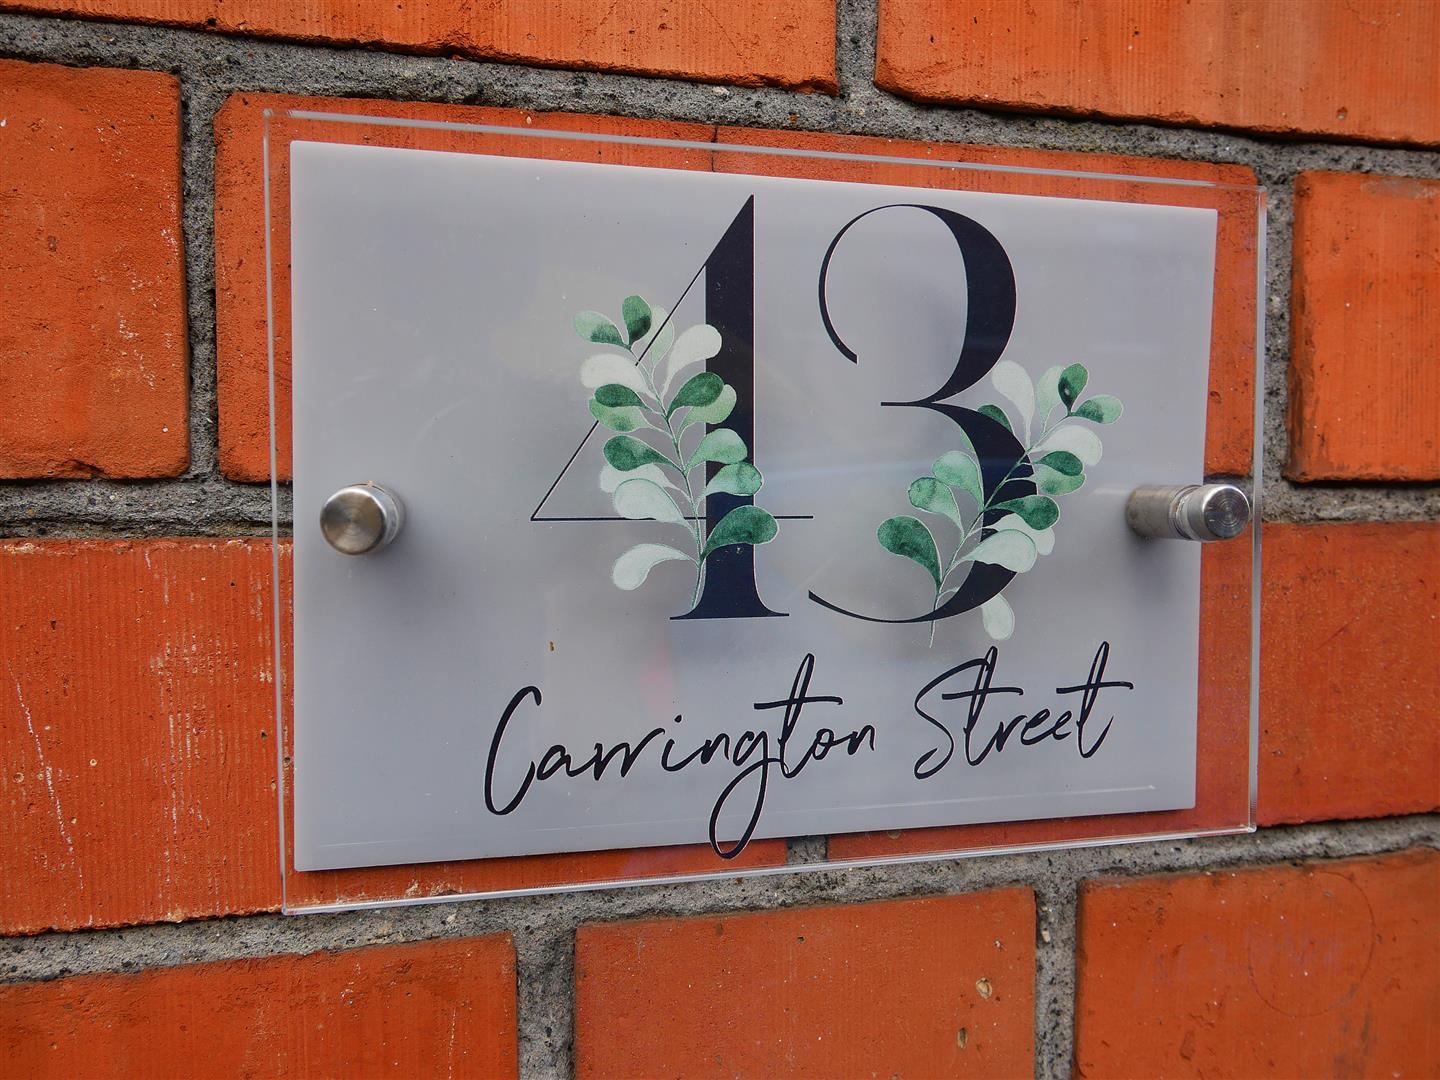 43 Carrington Street, Ravenhill Road